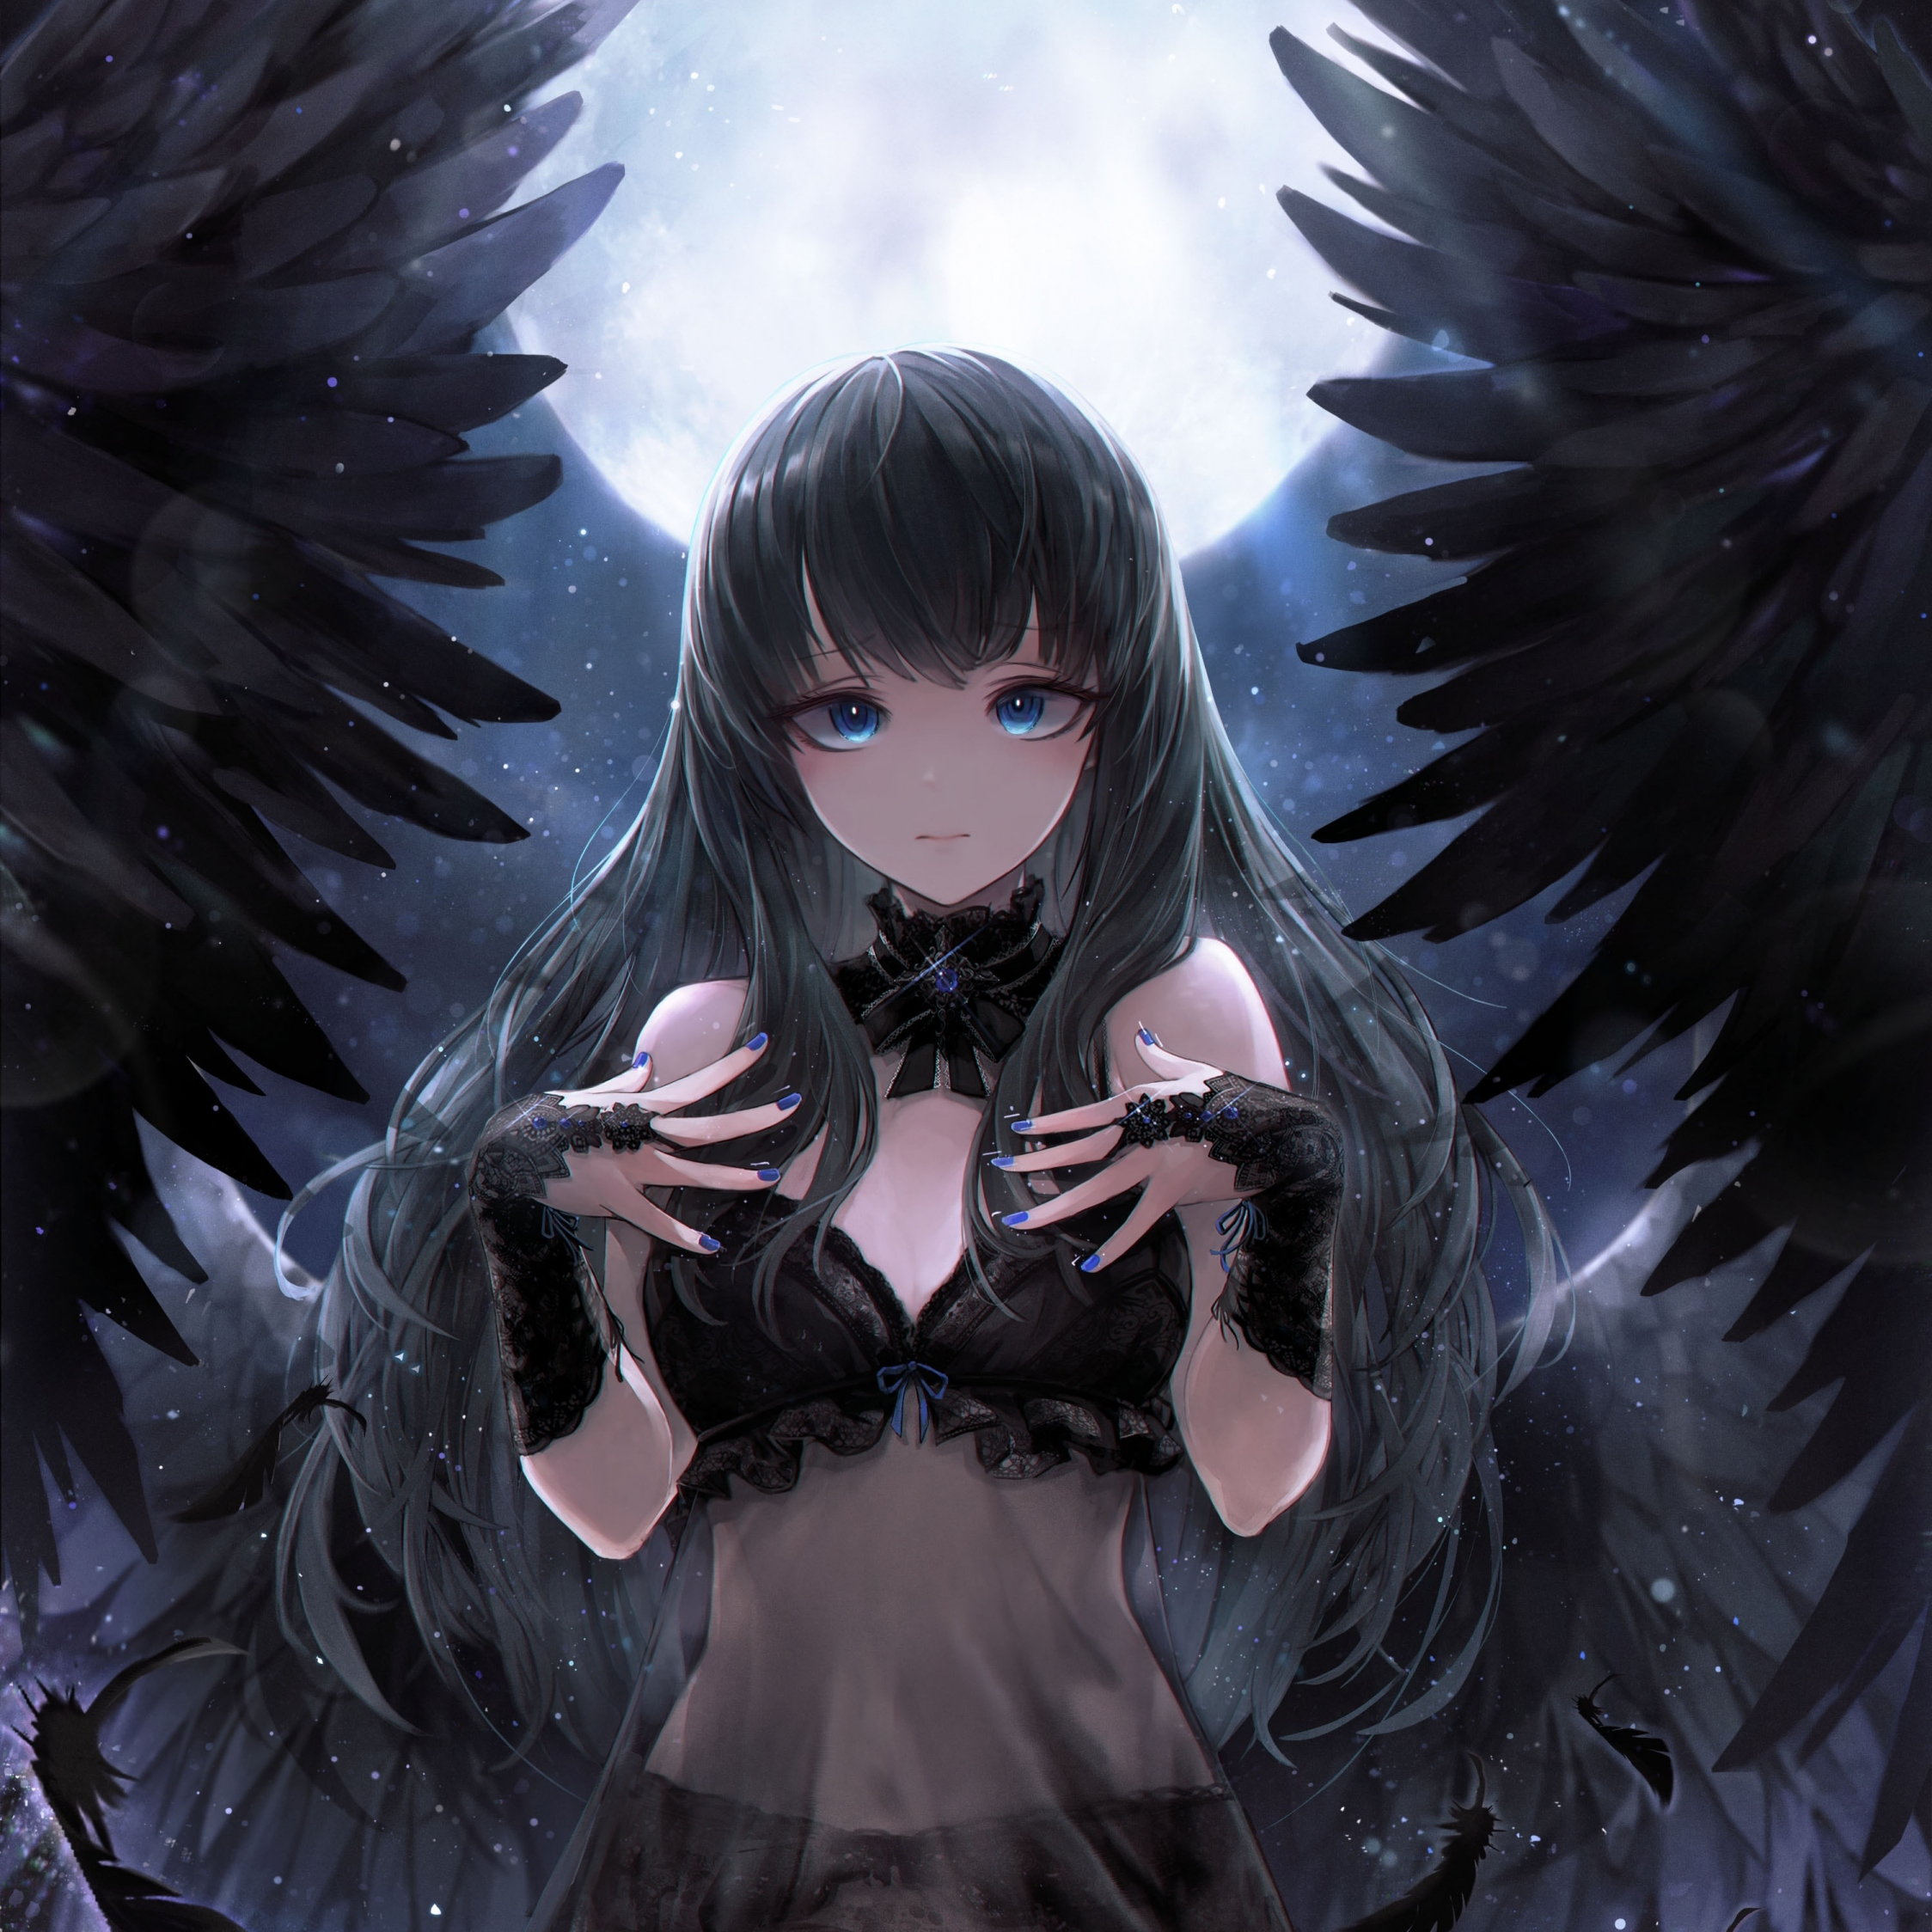 Download 2248x2248 Wallpaper Black Angel Cute Anime Girl